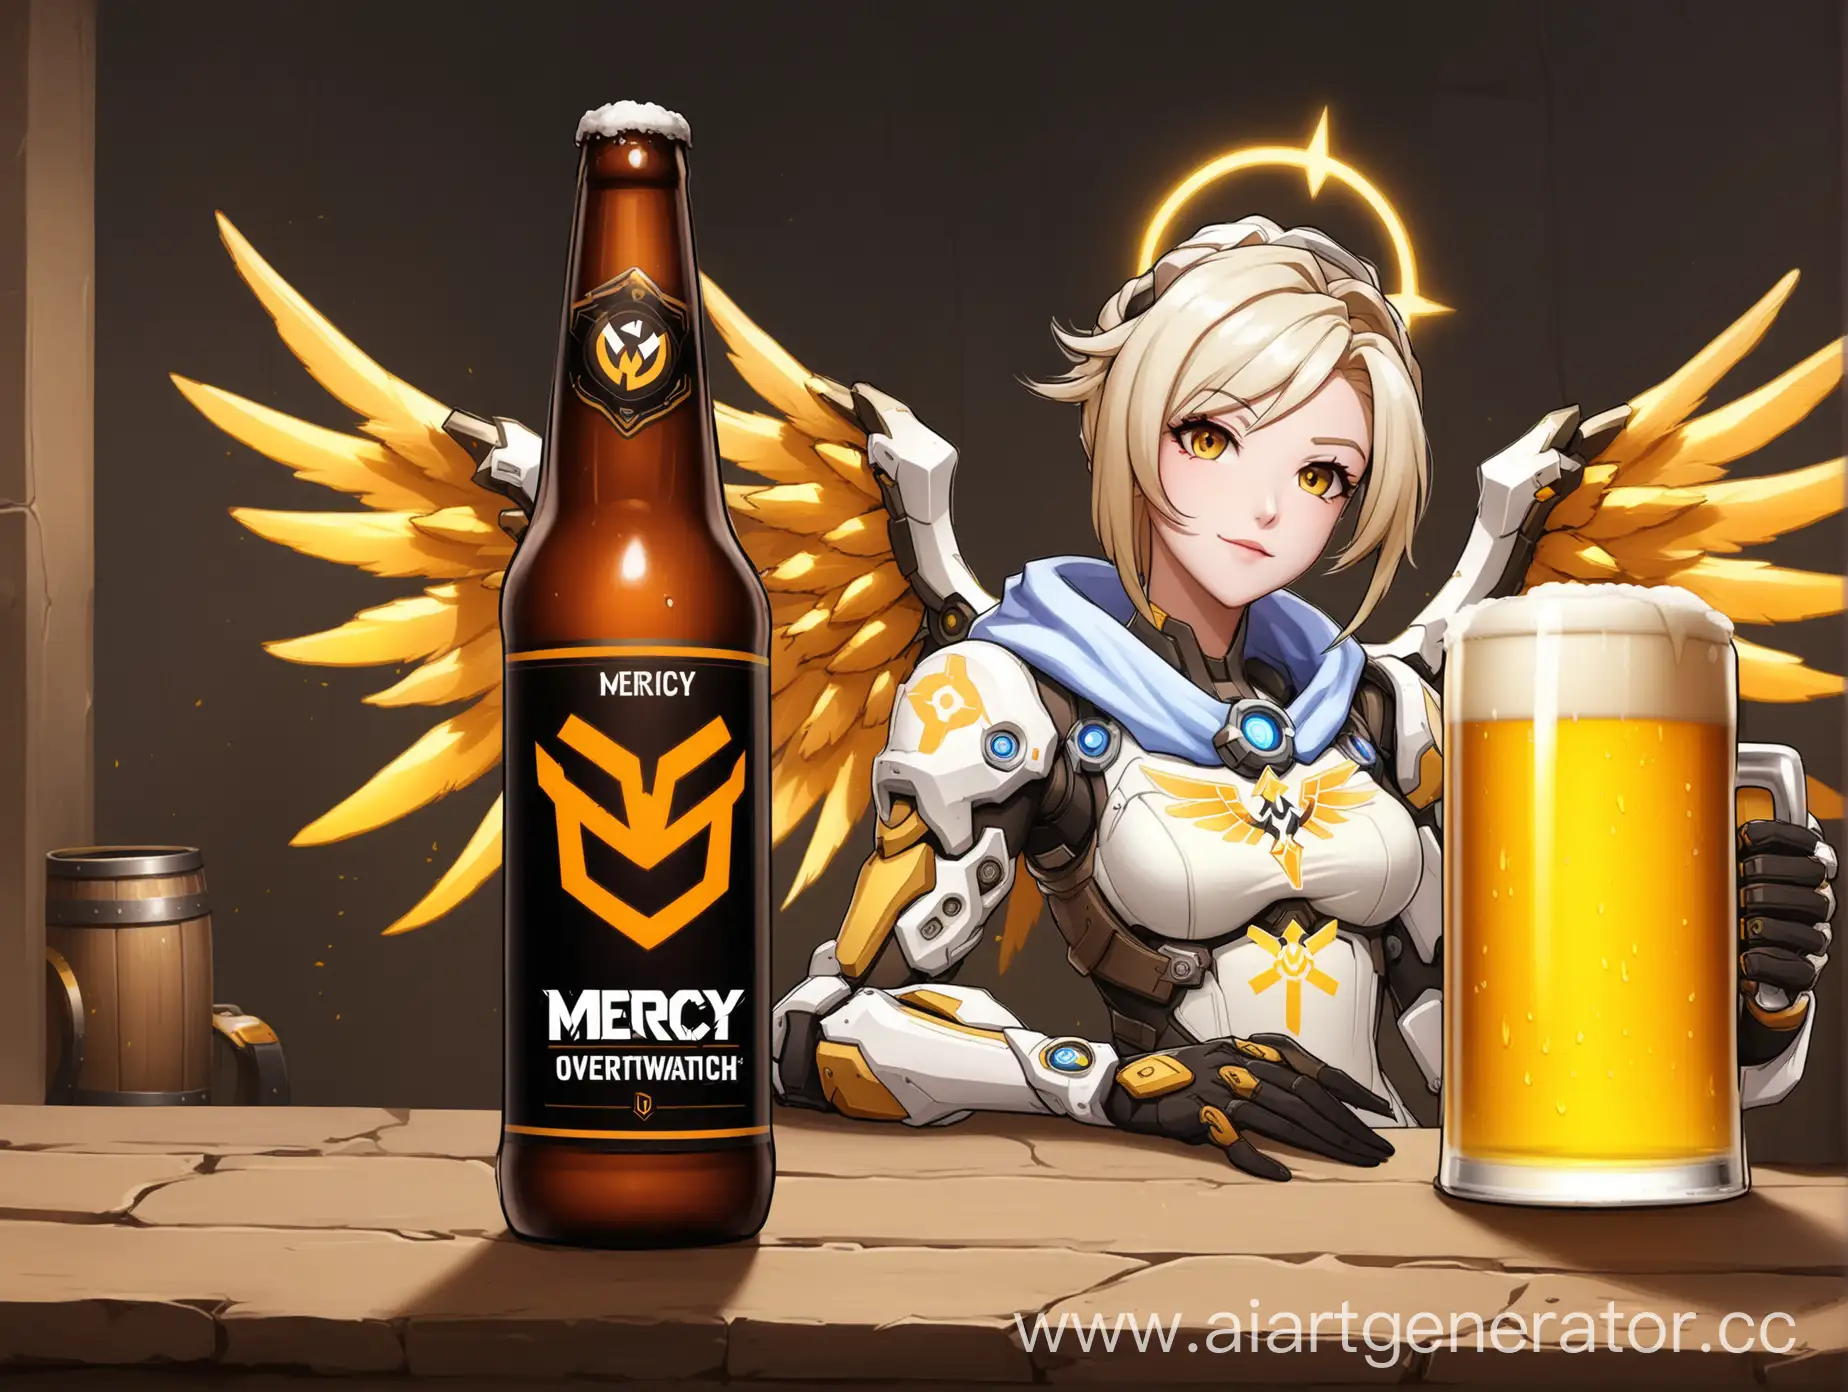 Mercy-Overwatch-Enjoying-Beer-Digital-Art-Illustration-of-a-Relaxing-Moment